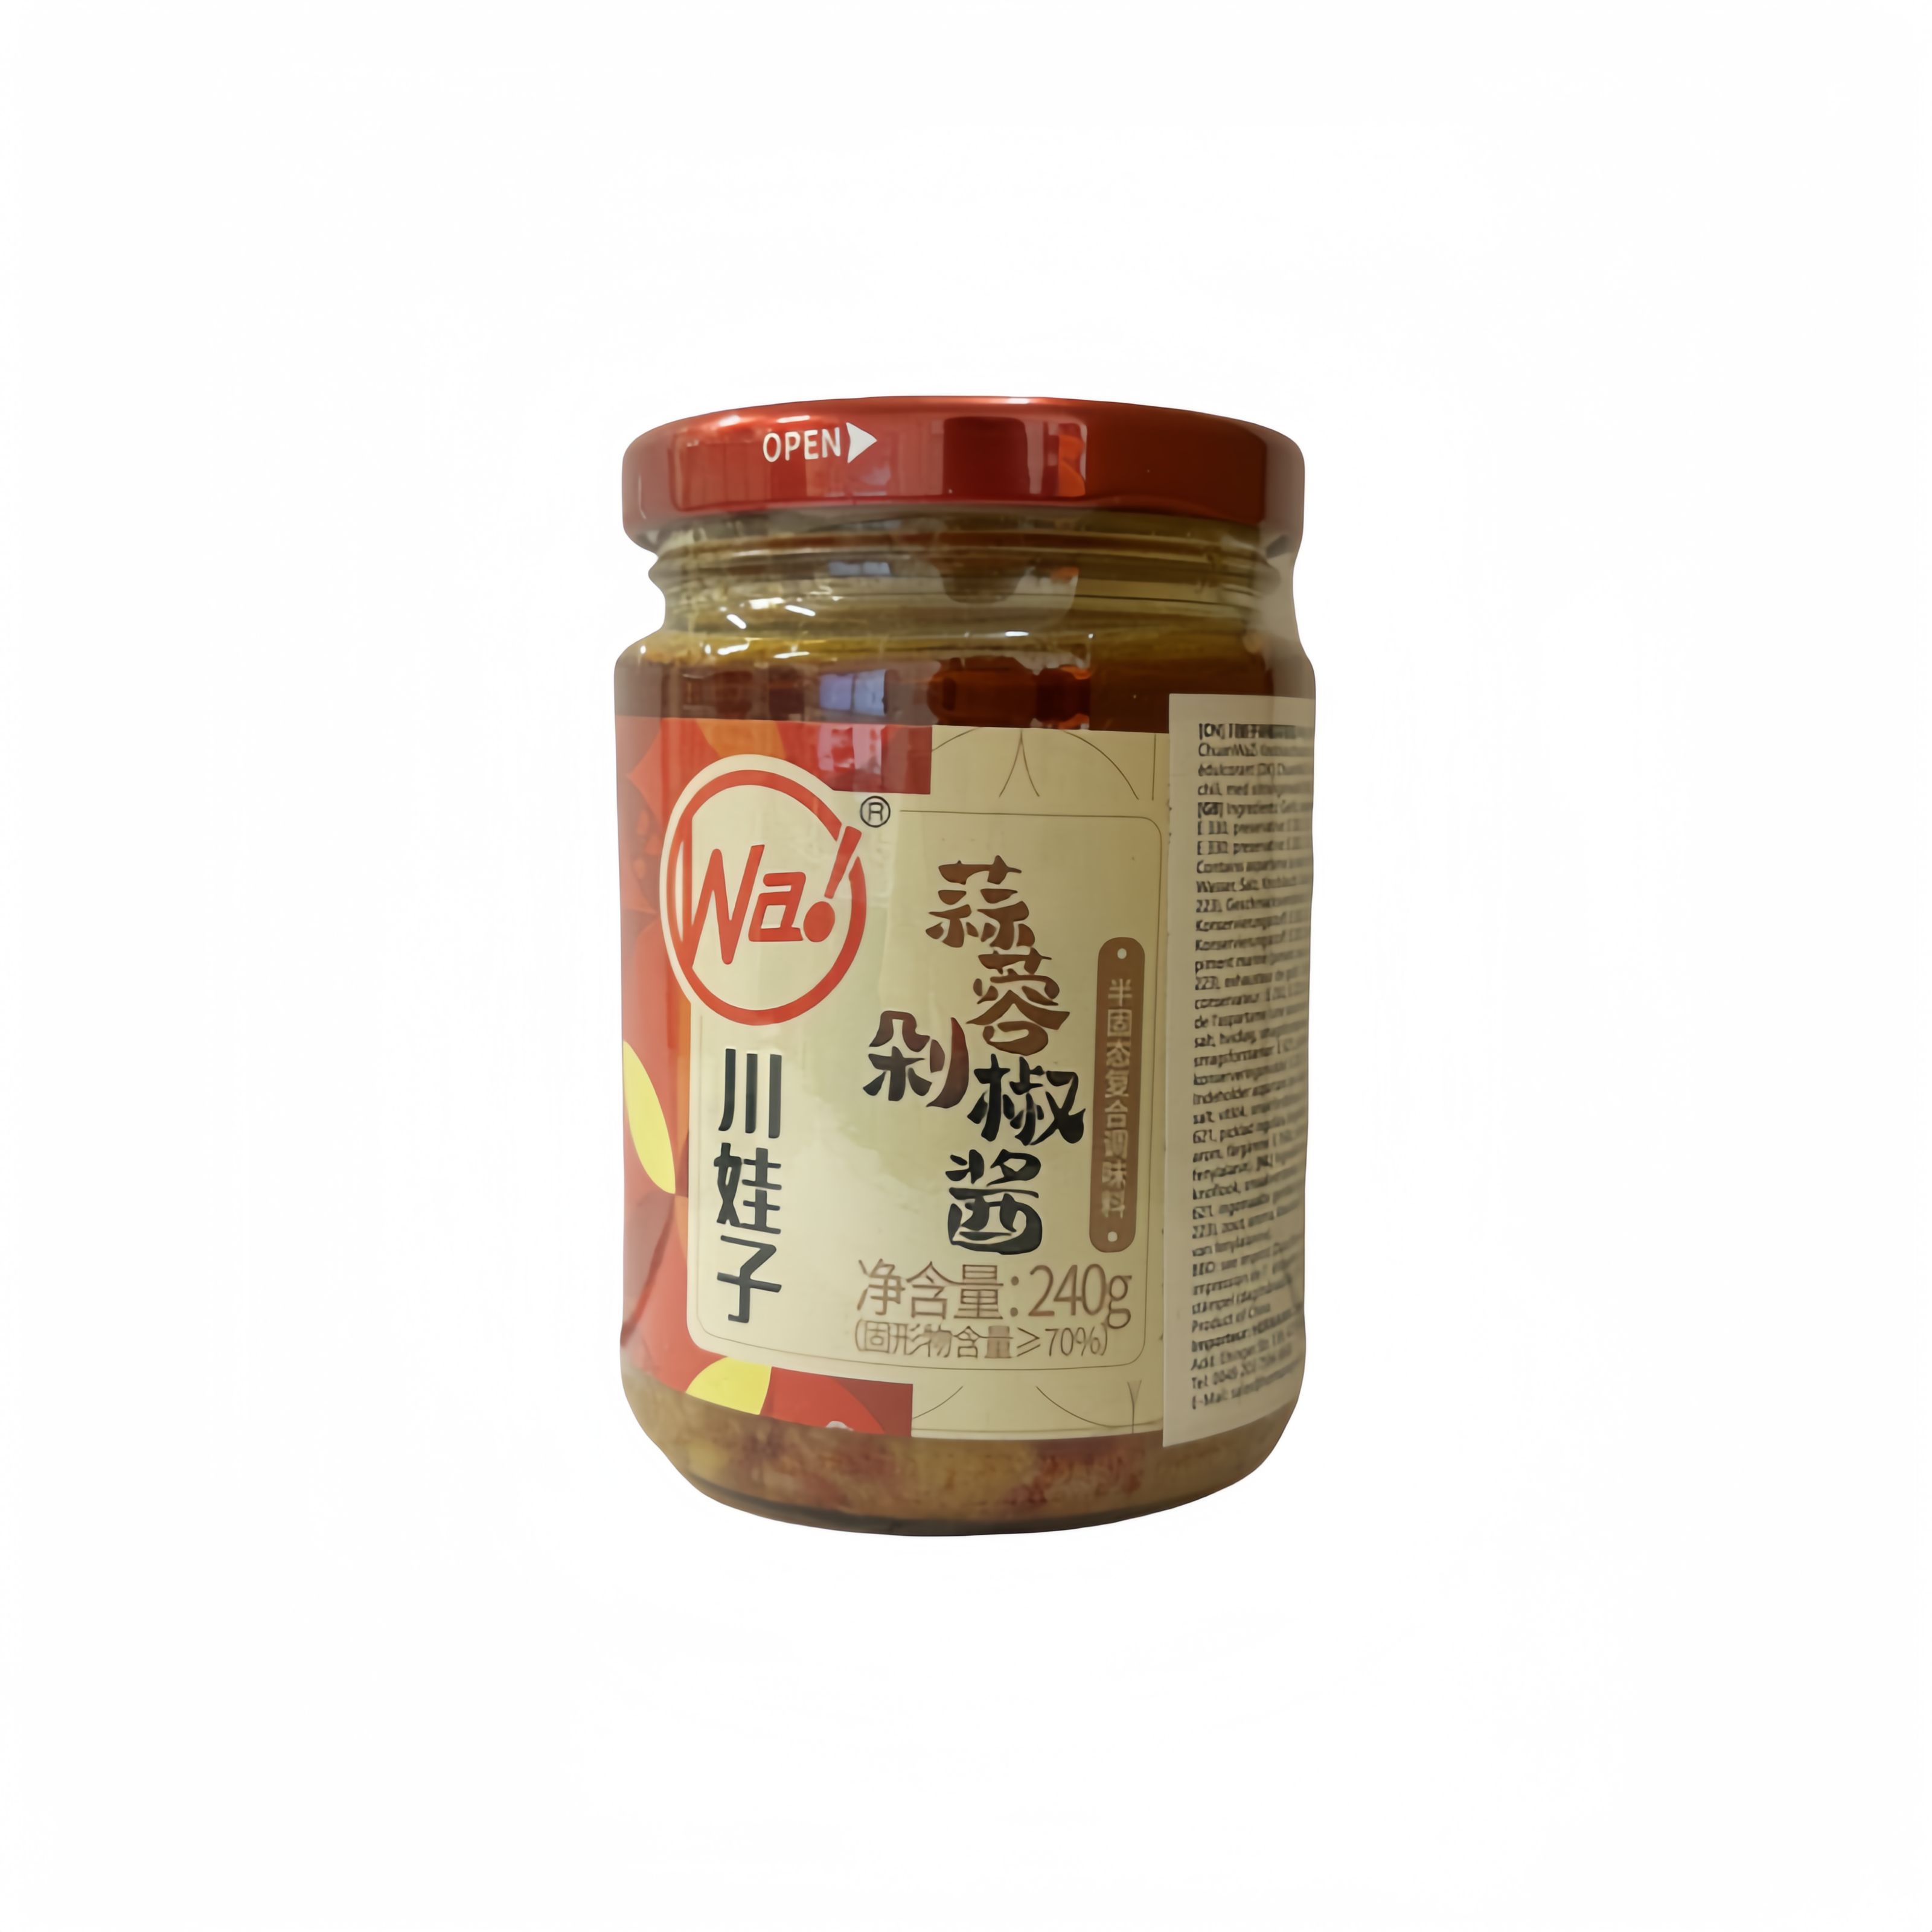 Chilli Sauce With Garlic 240g Chuan Wa Zi China